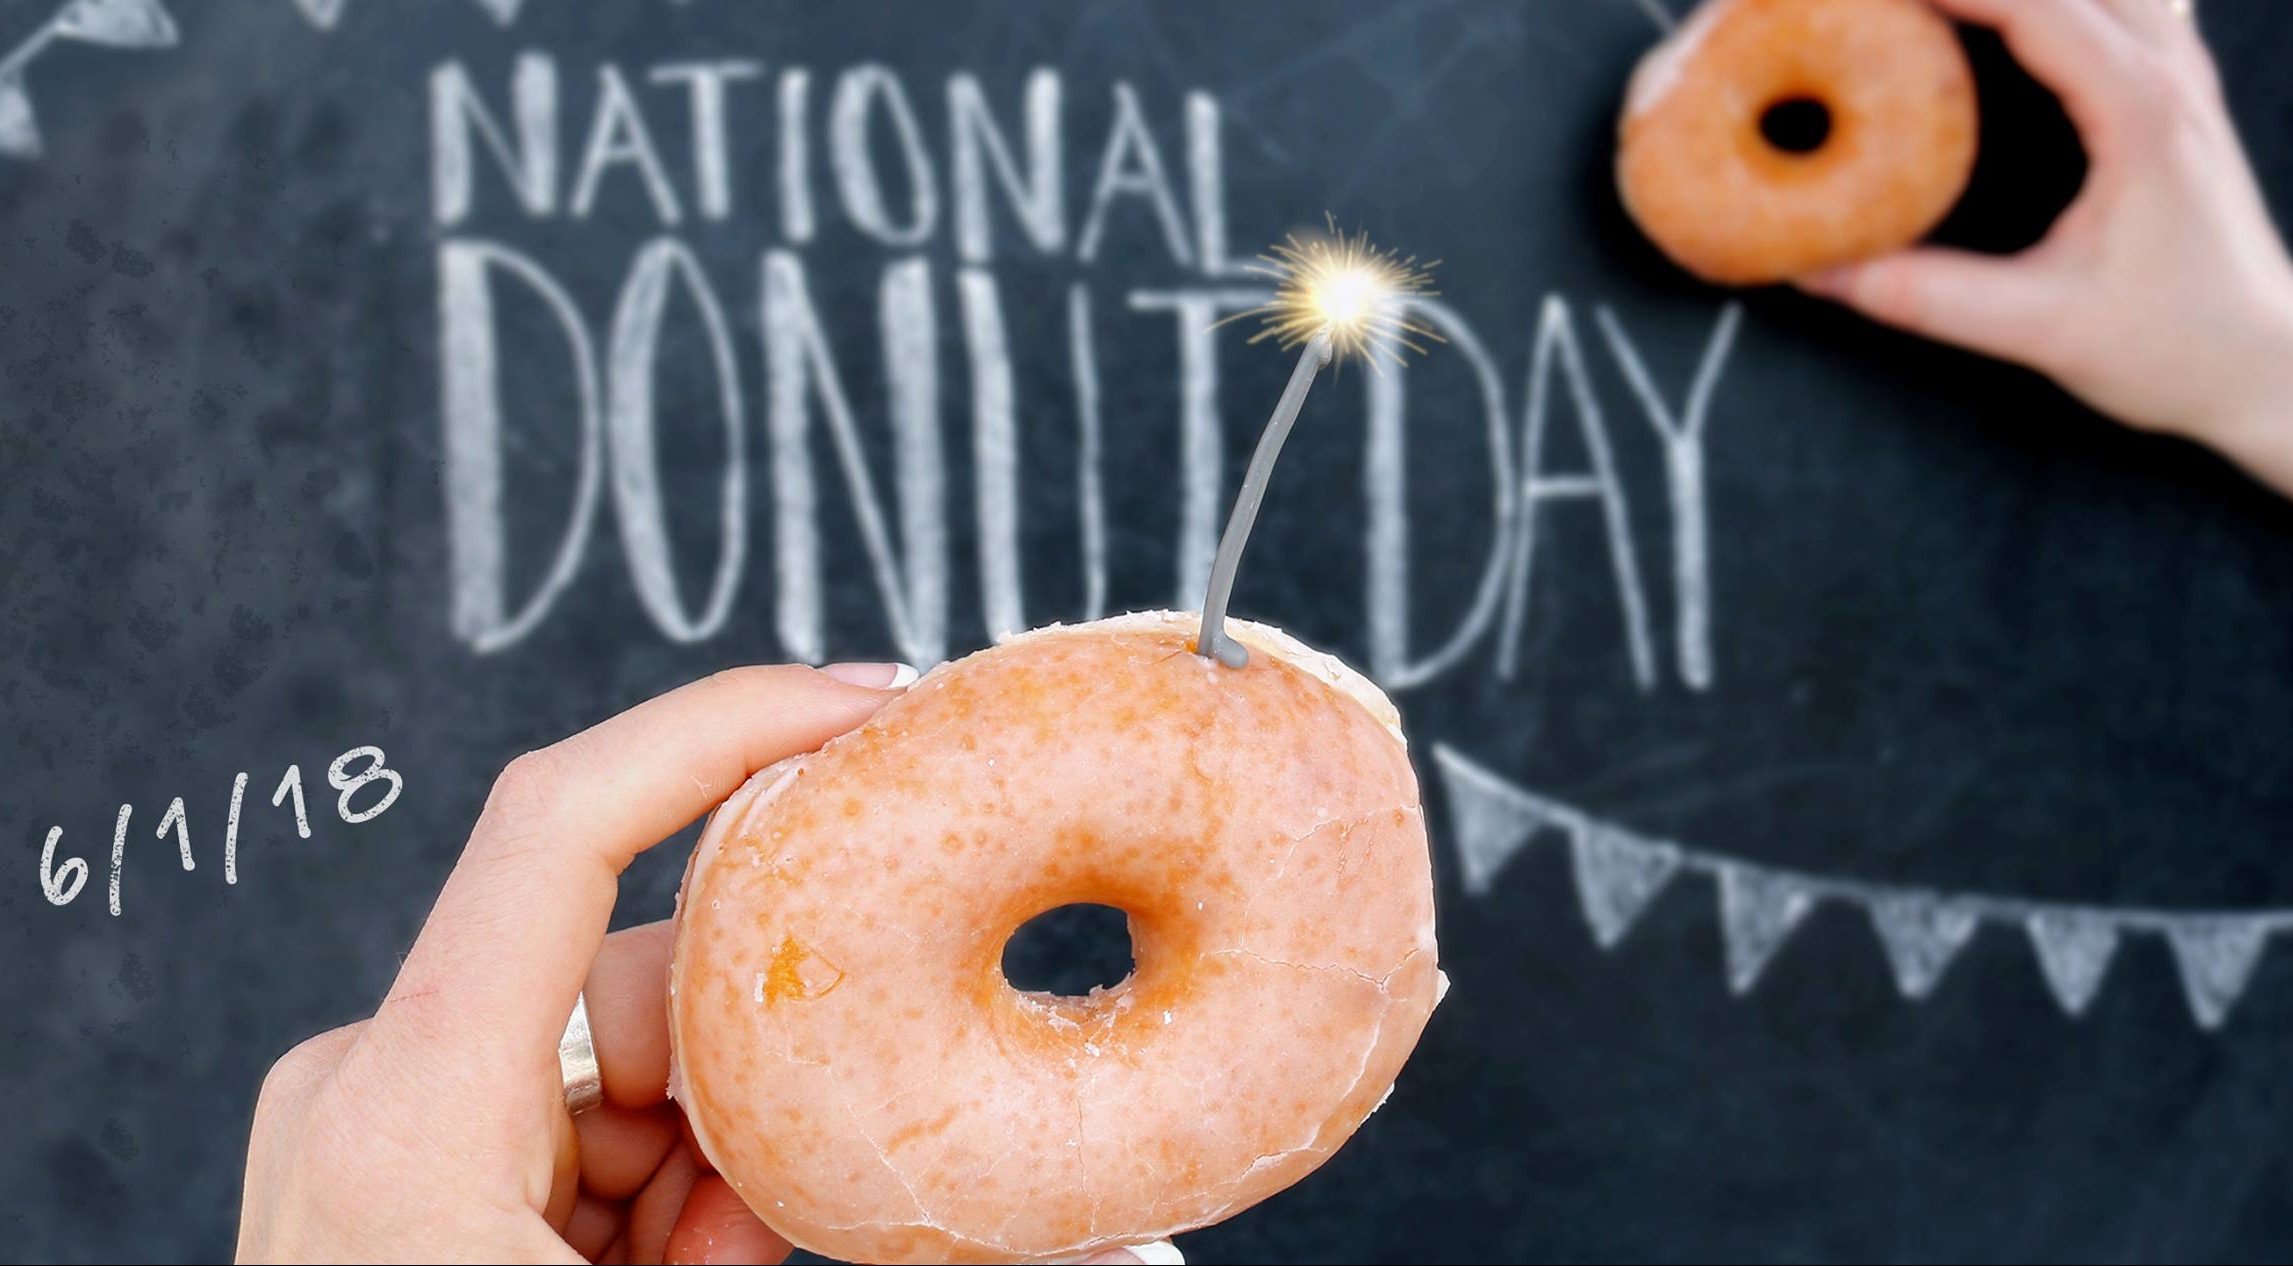 2018 national doughnut day freebies – kwik trip donut